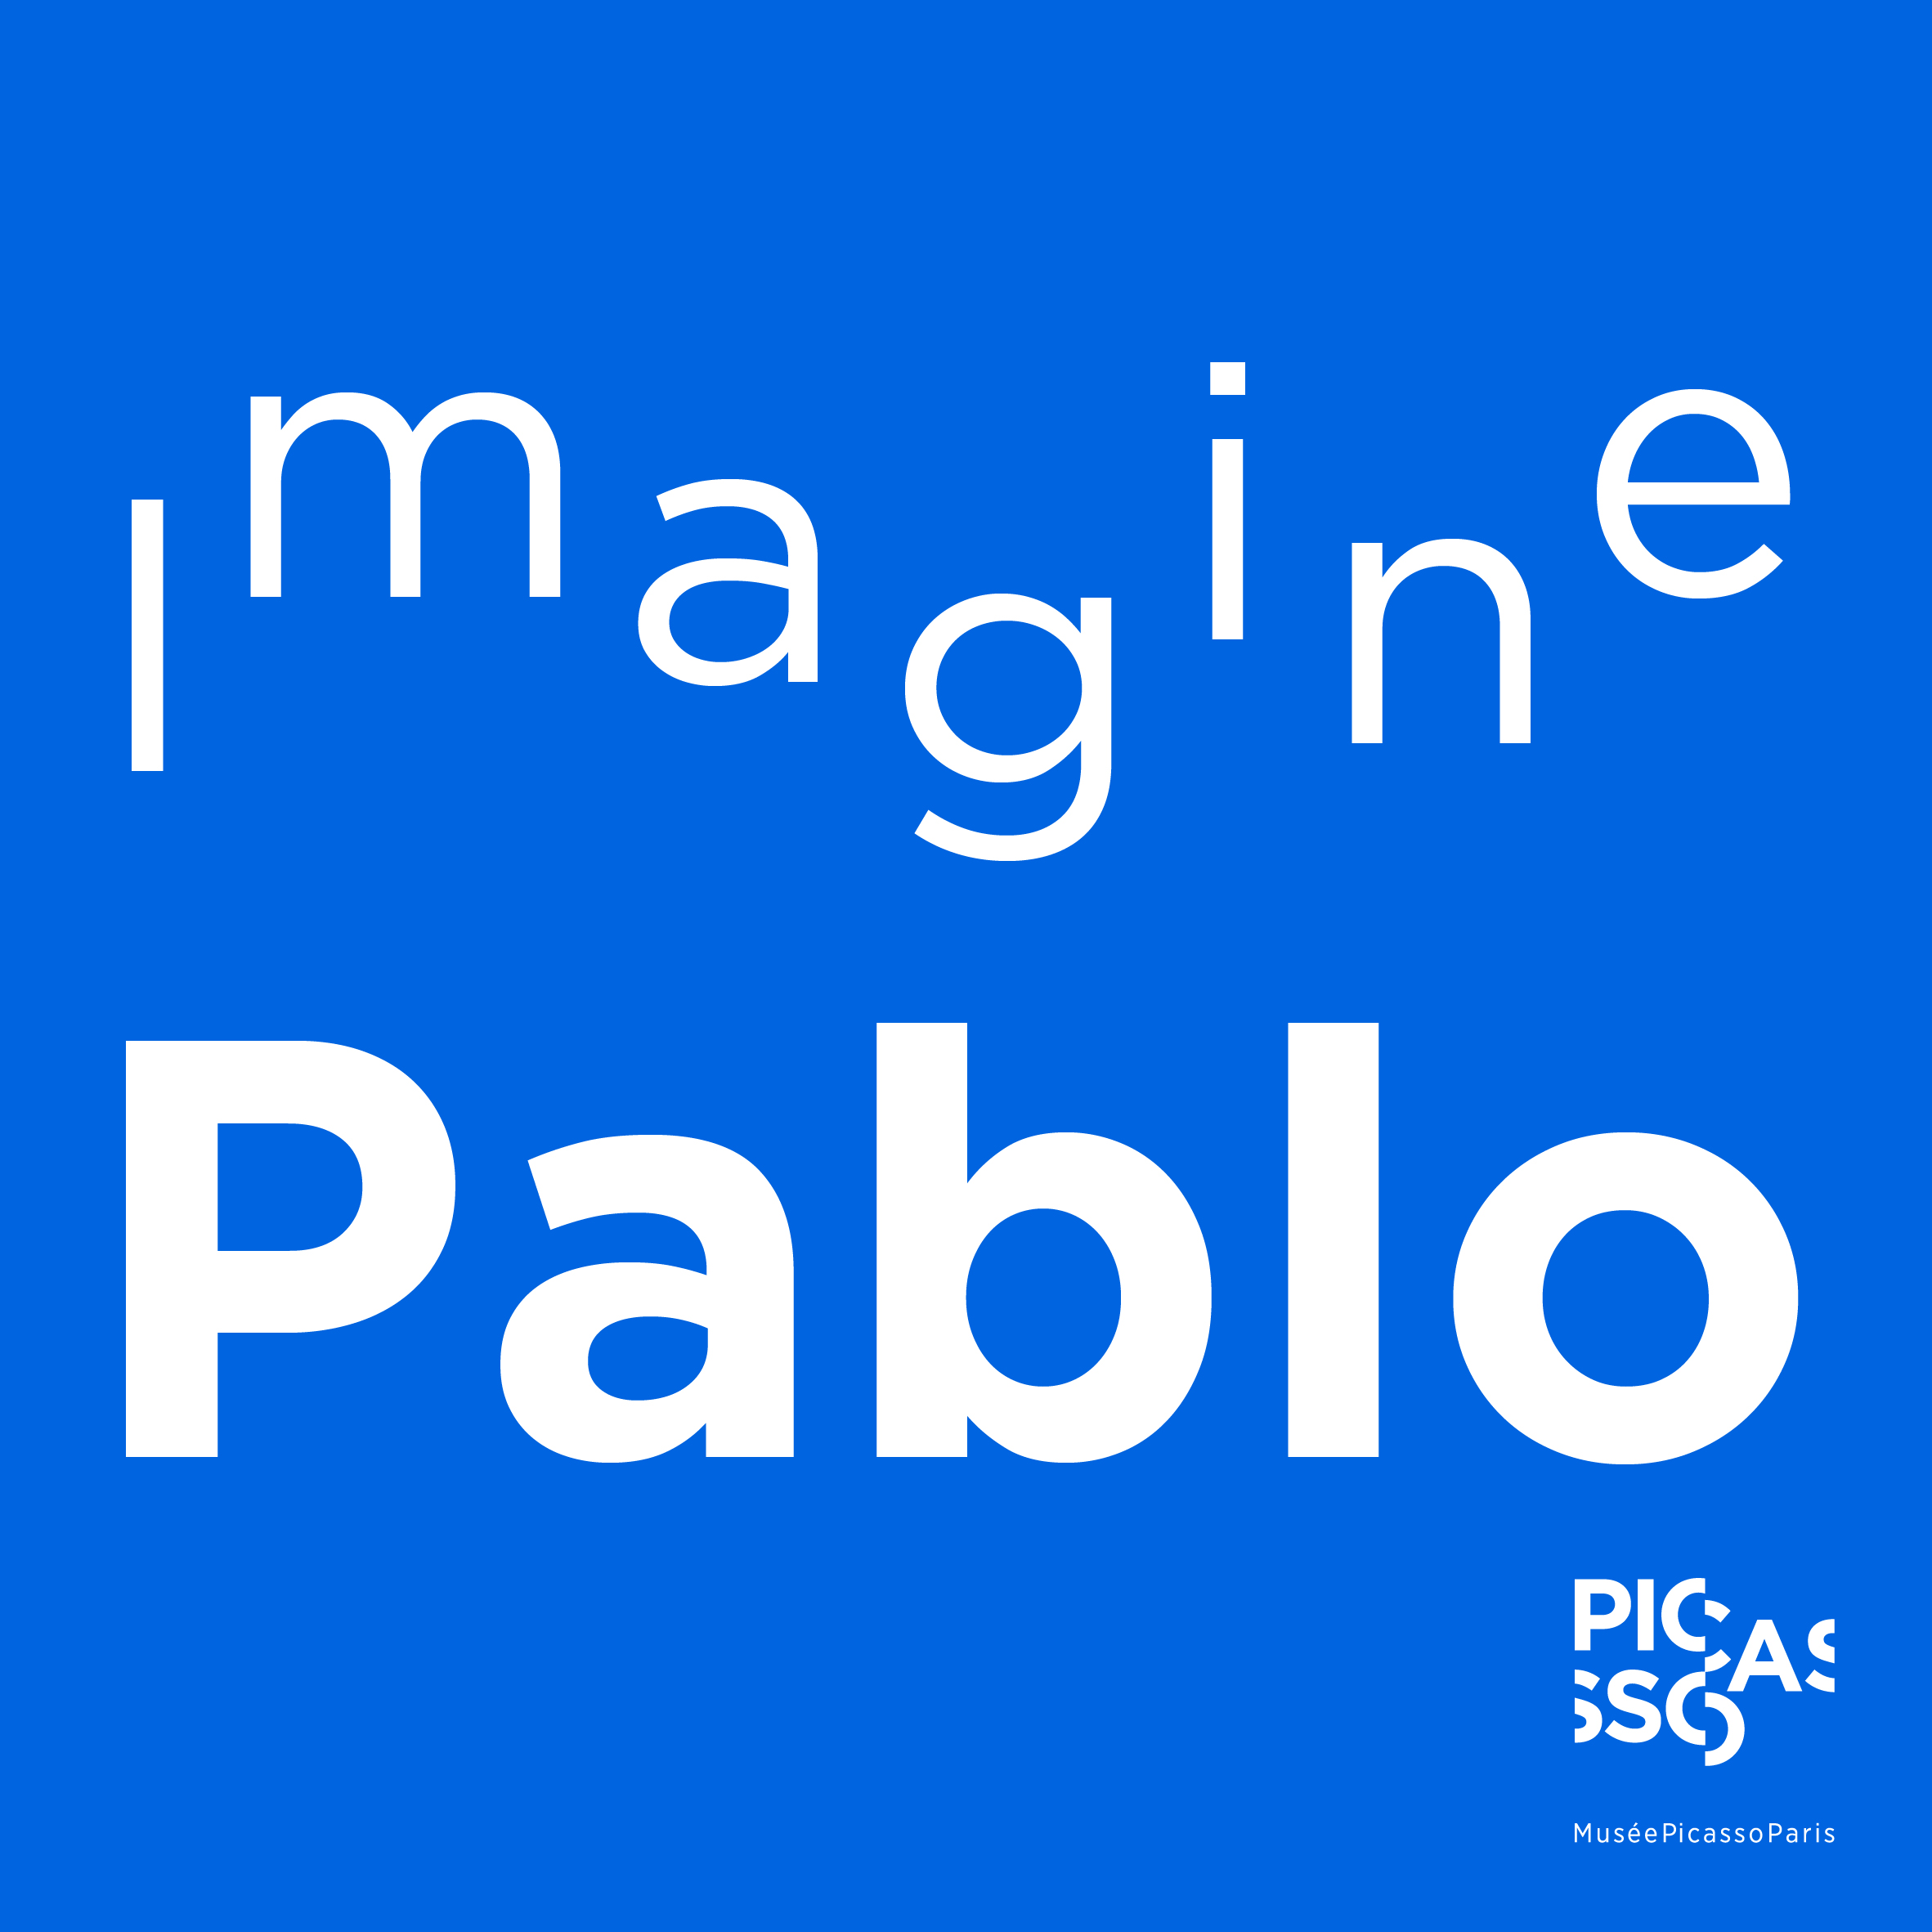 Imagine Pablo - 1